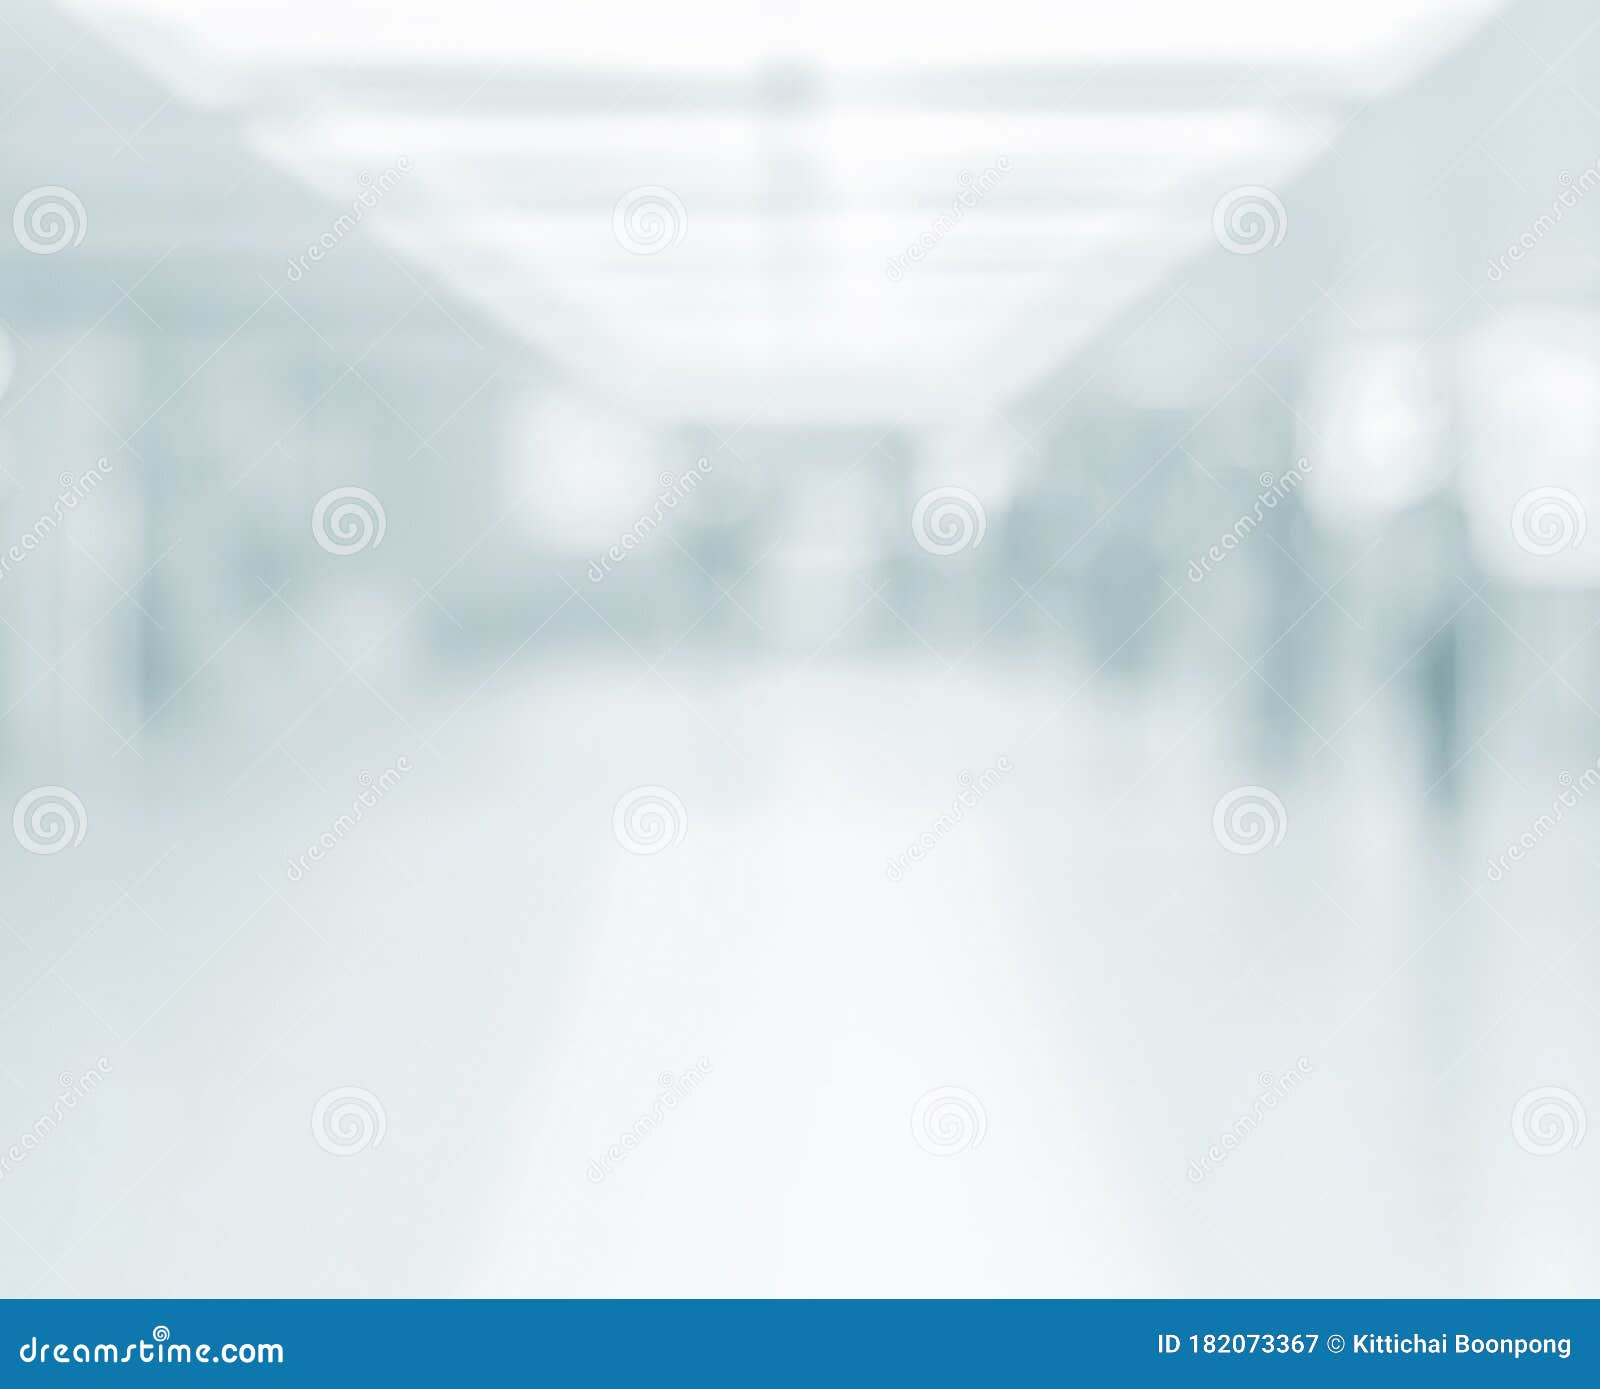 medical blurred background, modern hospital inetior hall